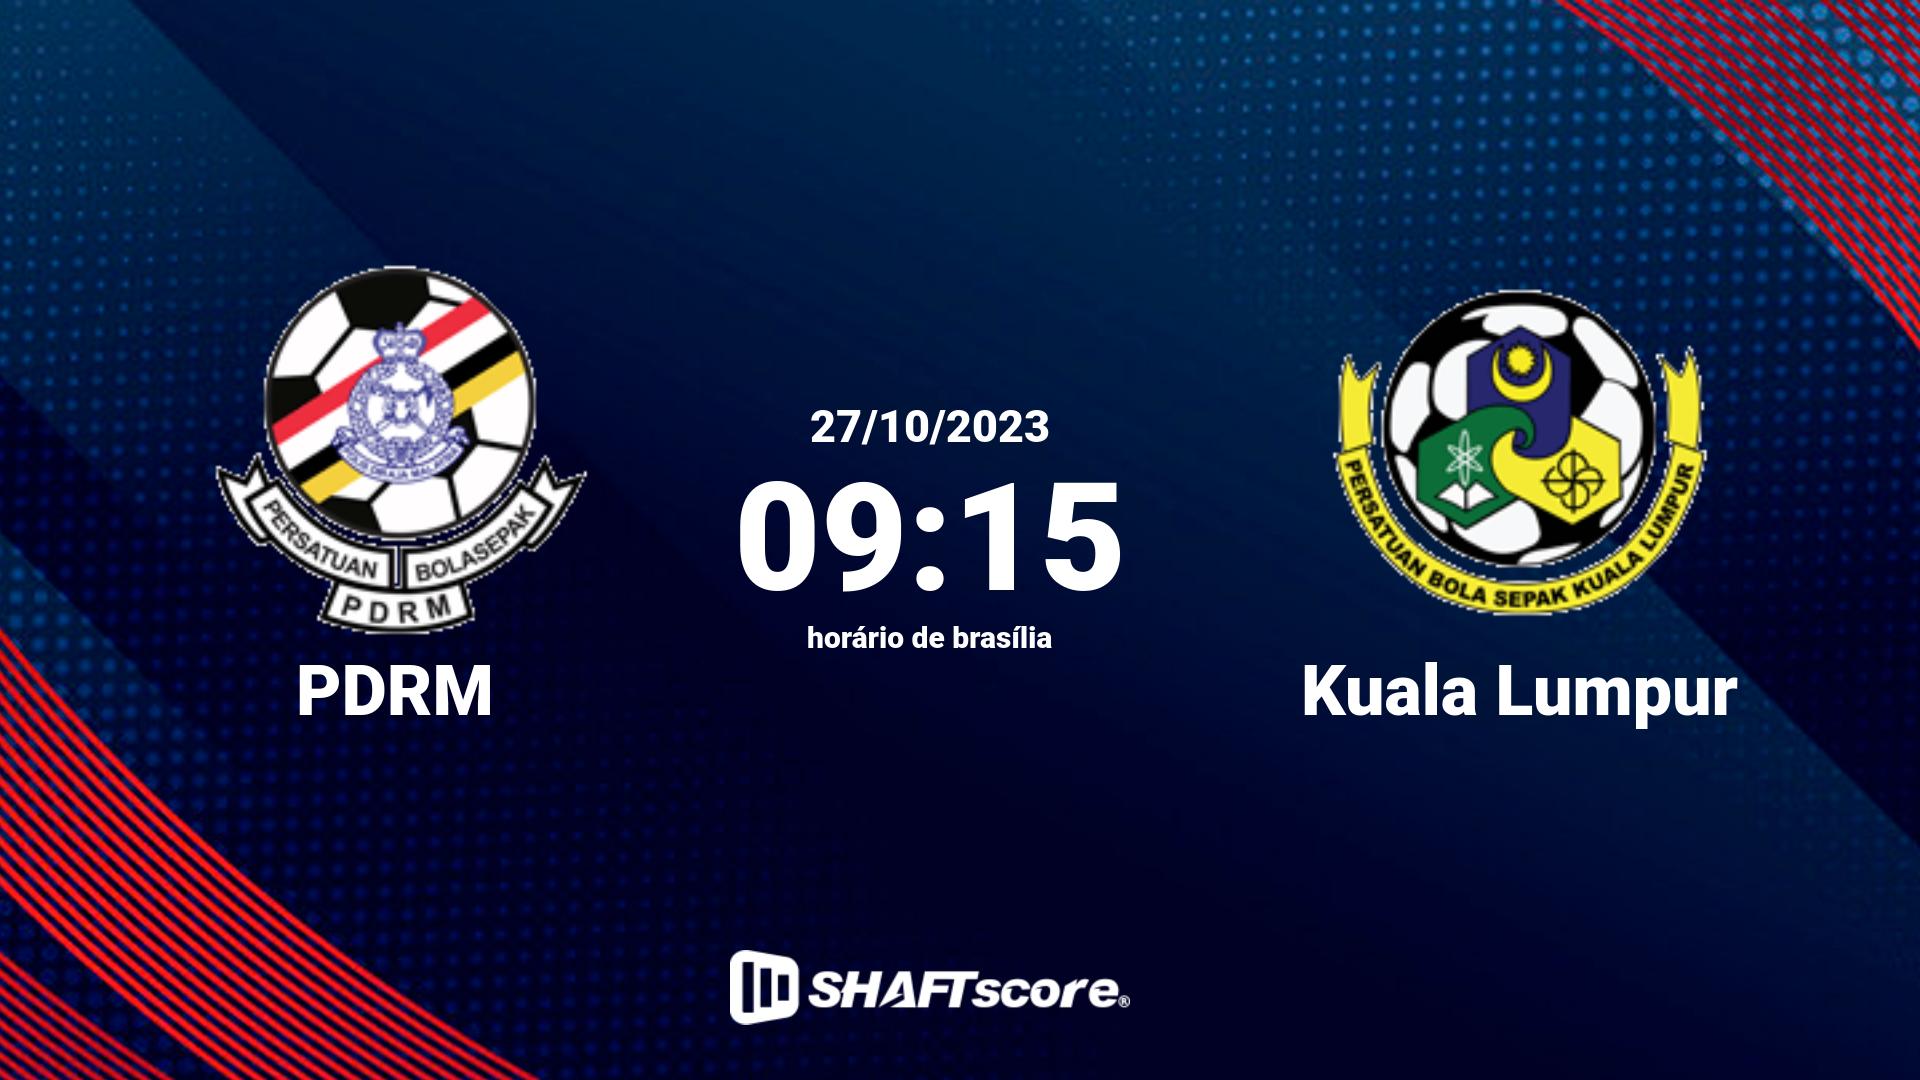 Estatísticas do jogo PDRM vs Kuala Lumpur 27.10 09:15